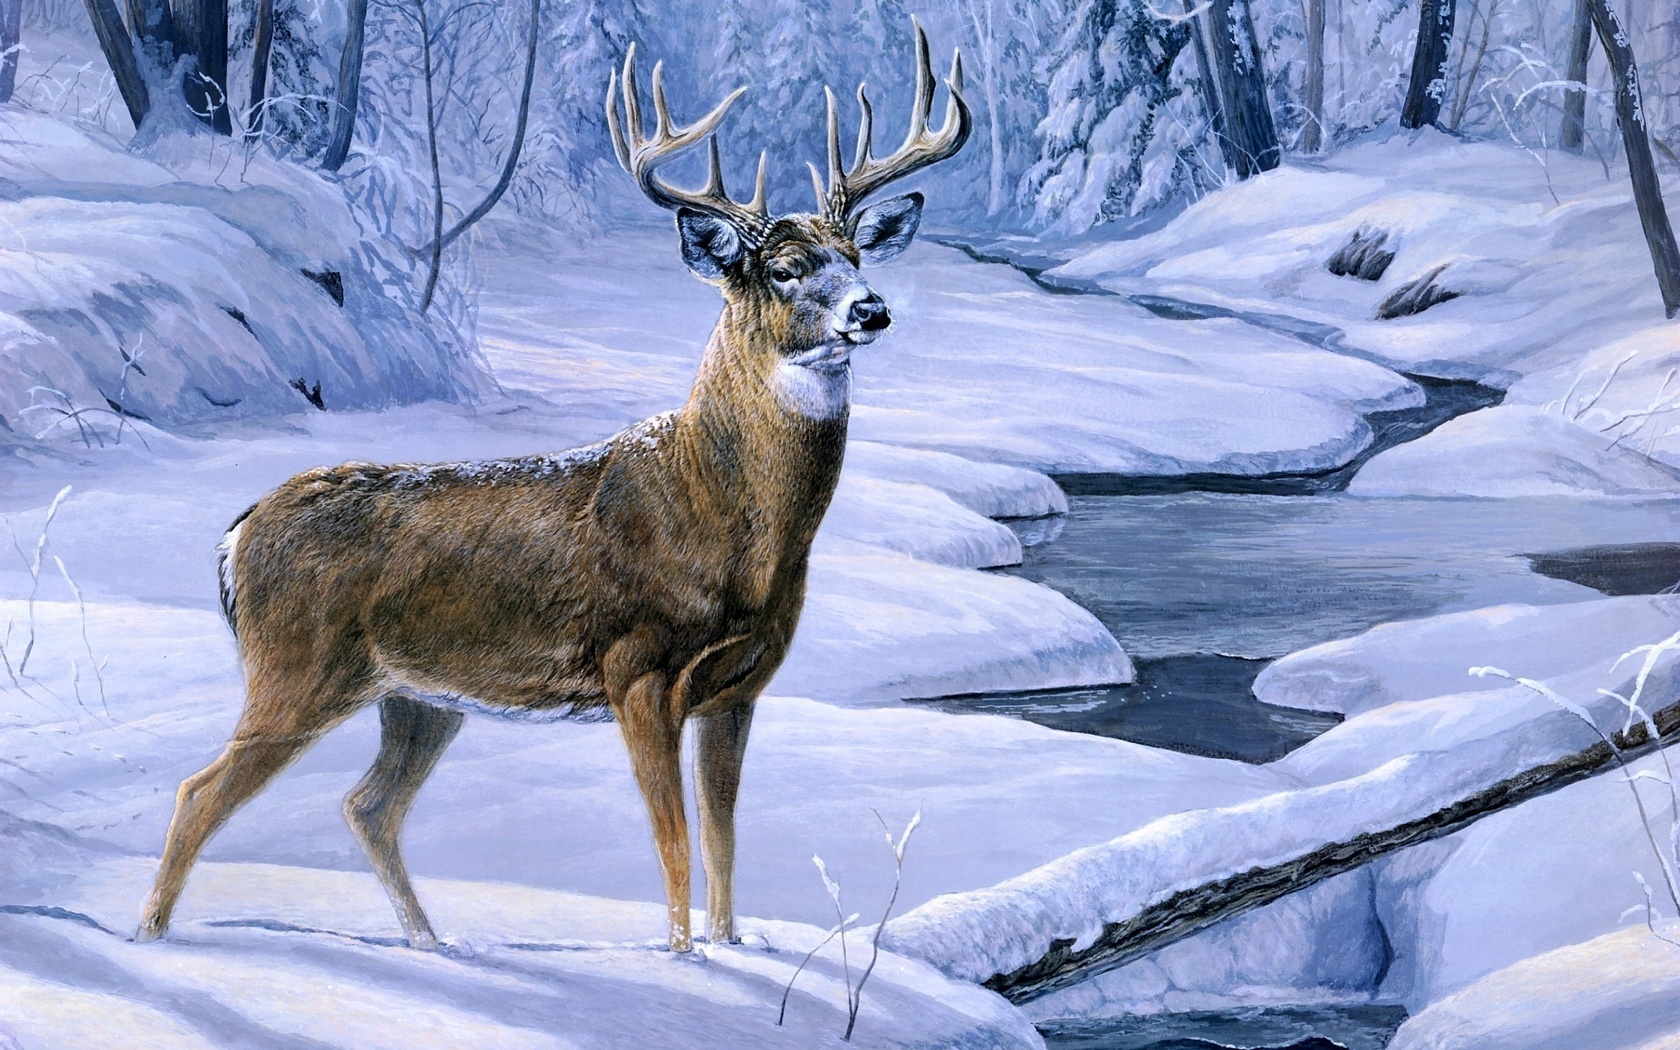 , deer, creek, Laura mark finberg, winter, animal, snow, november snow, painting, forest